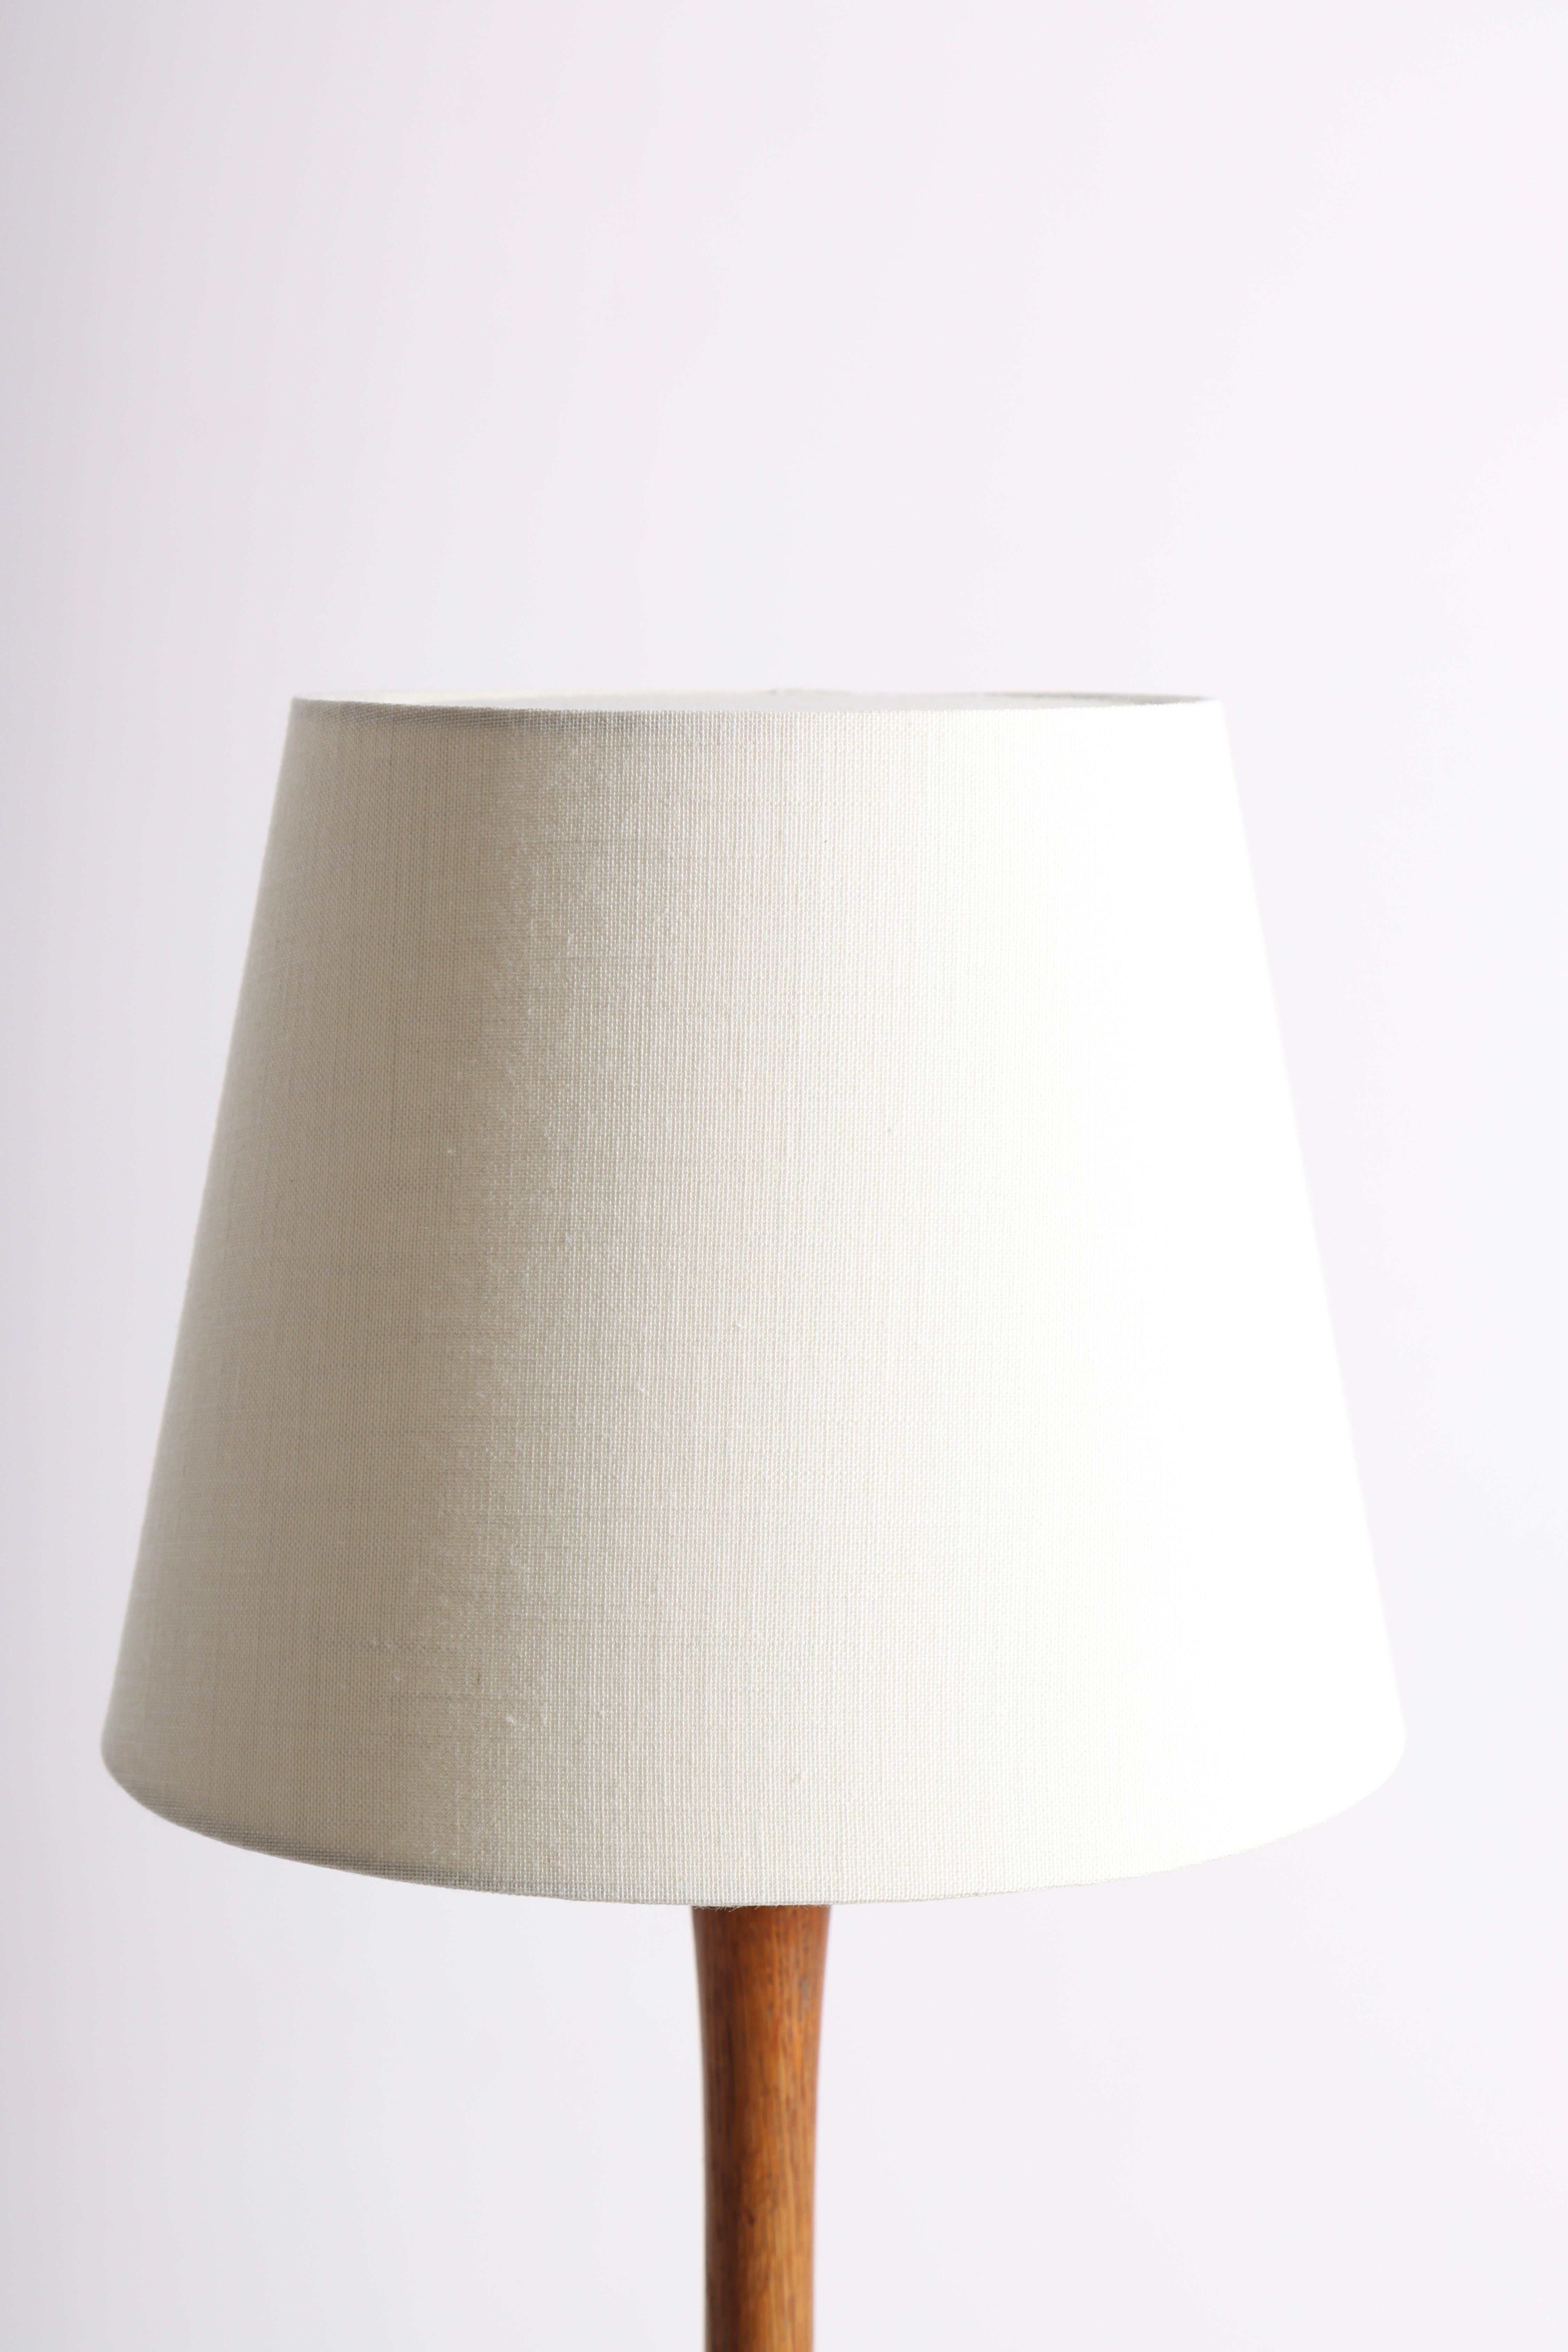 Mid-Century Scandinavian Table Lamp in Solid Oak, Made in Denmark, 1960s For Sale 1